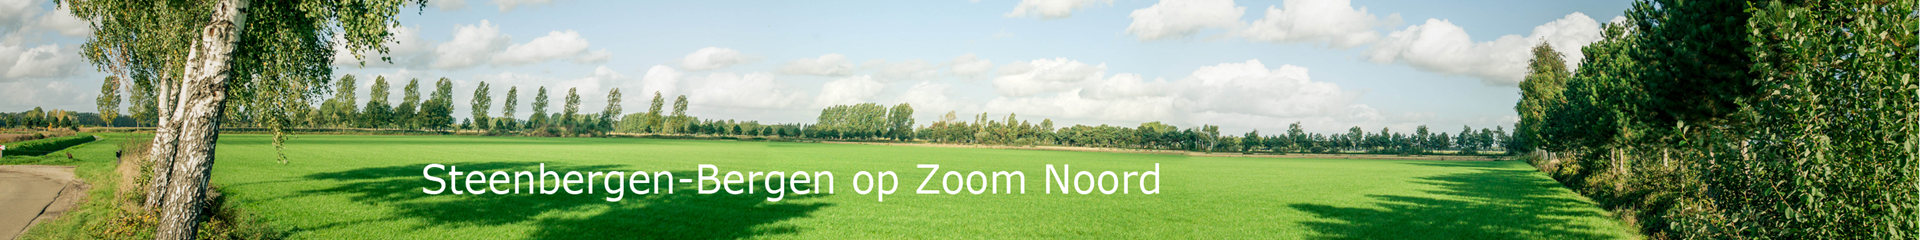 Afdelingsbanner website - Steenbergen-Bergen op Zoom Noord